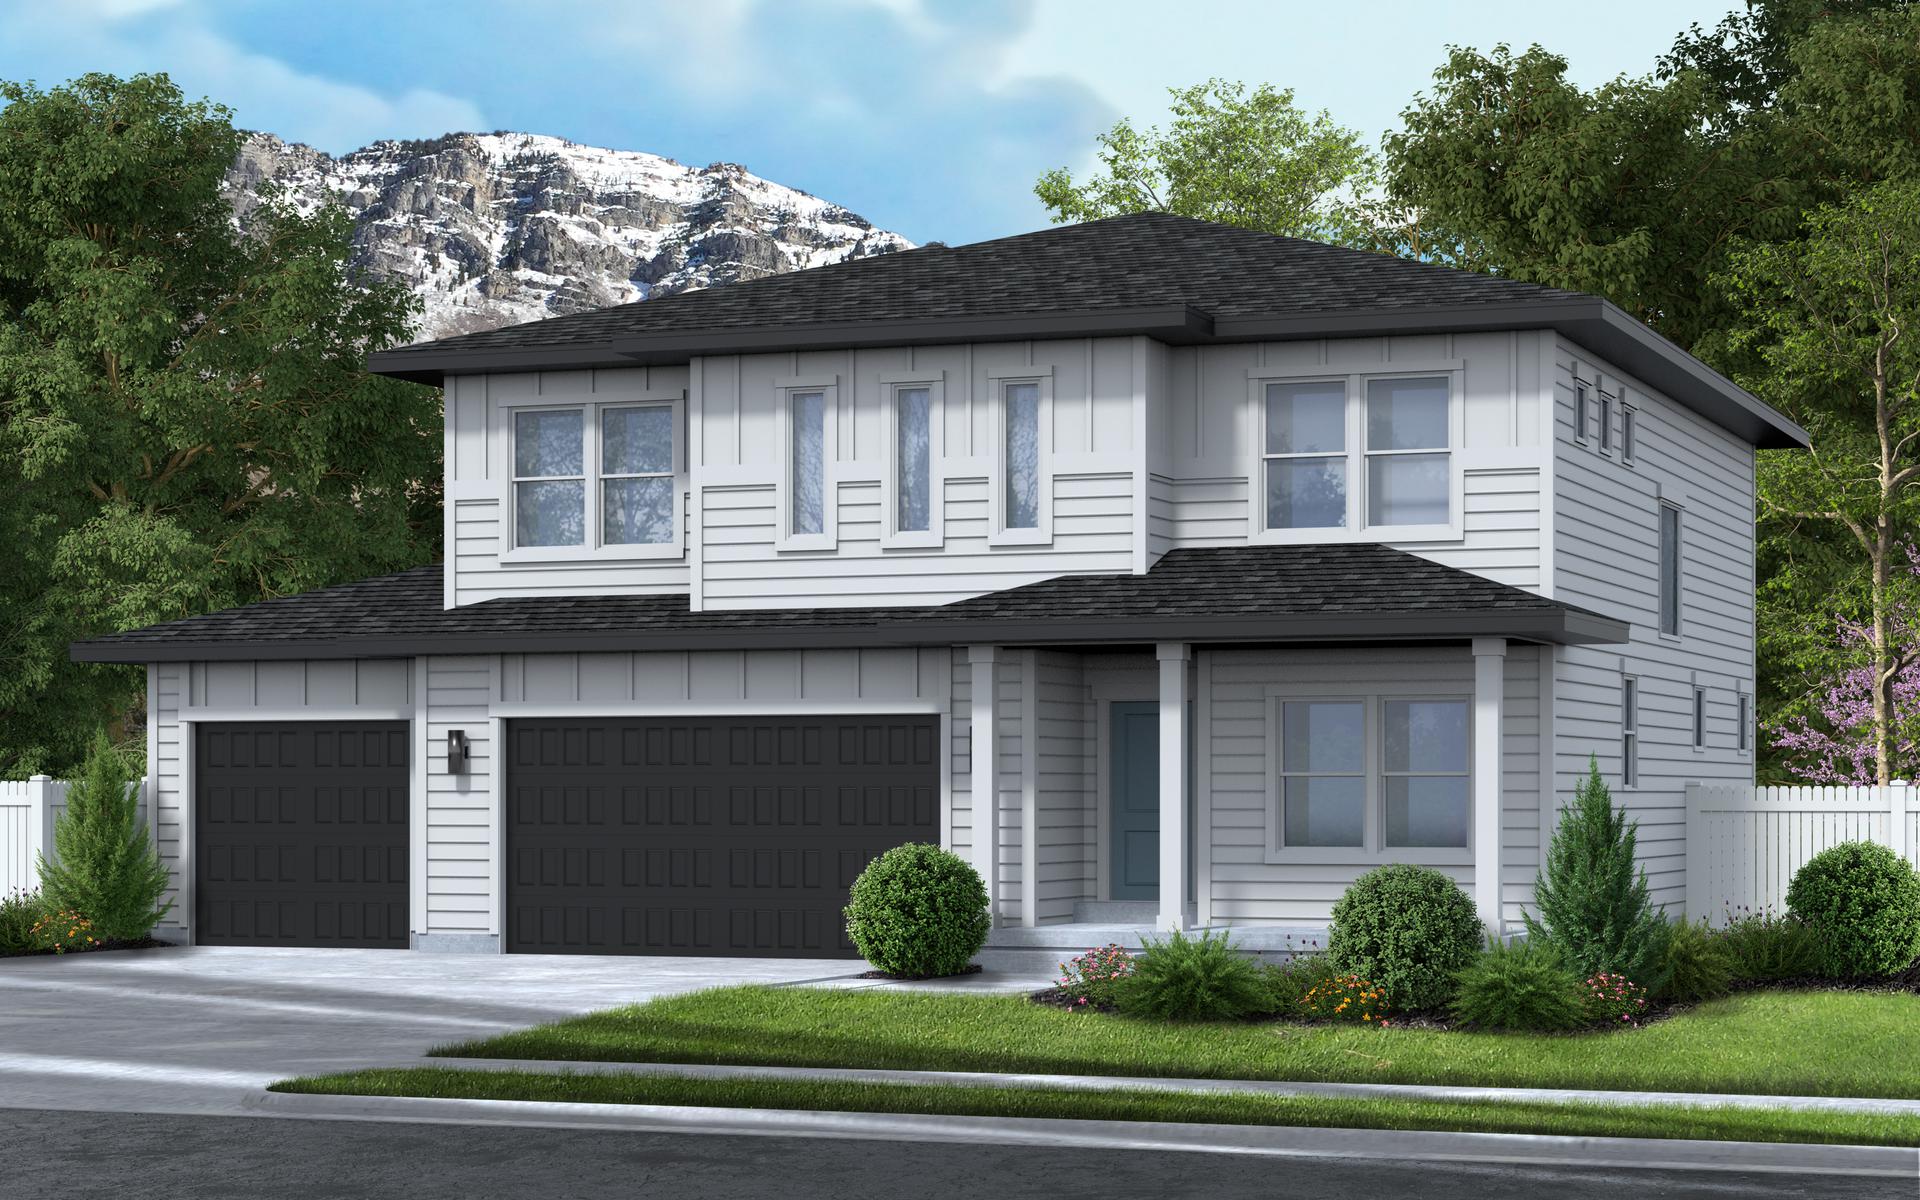 Alpine Transitional - ADU Option new home in Saratoga Springs, UT